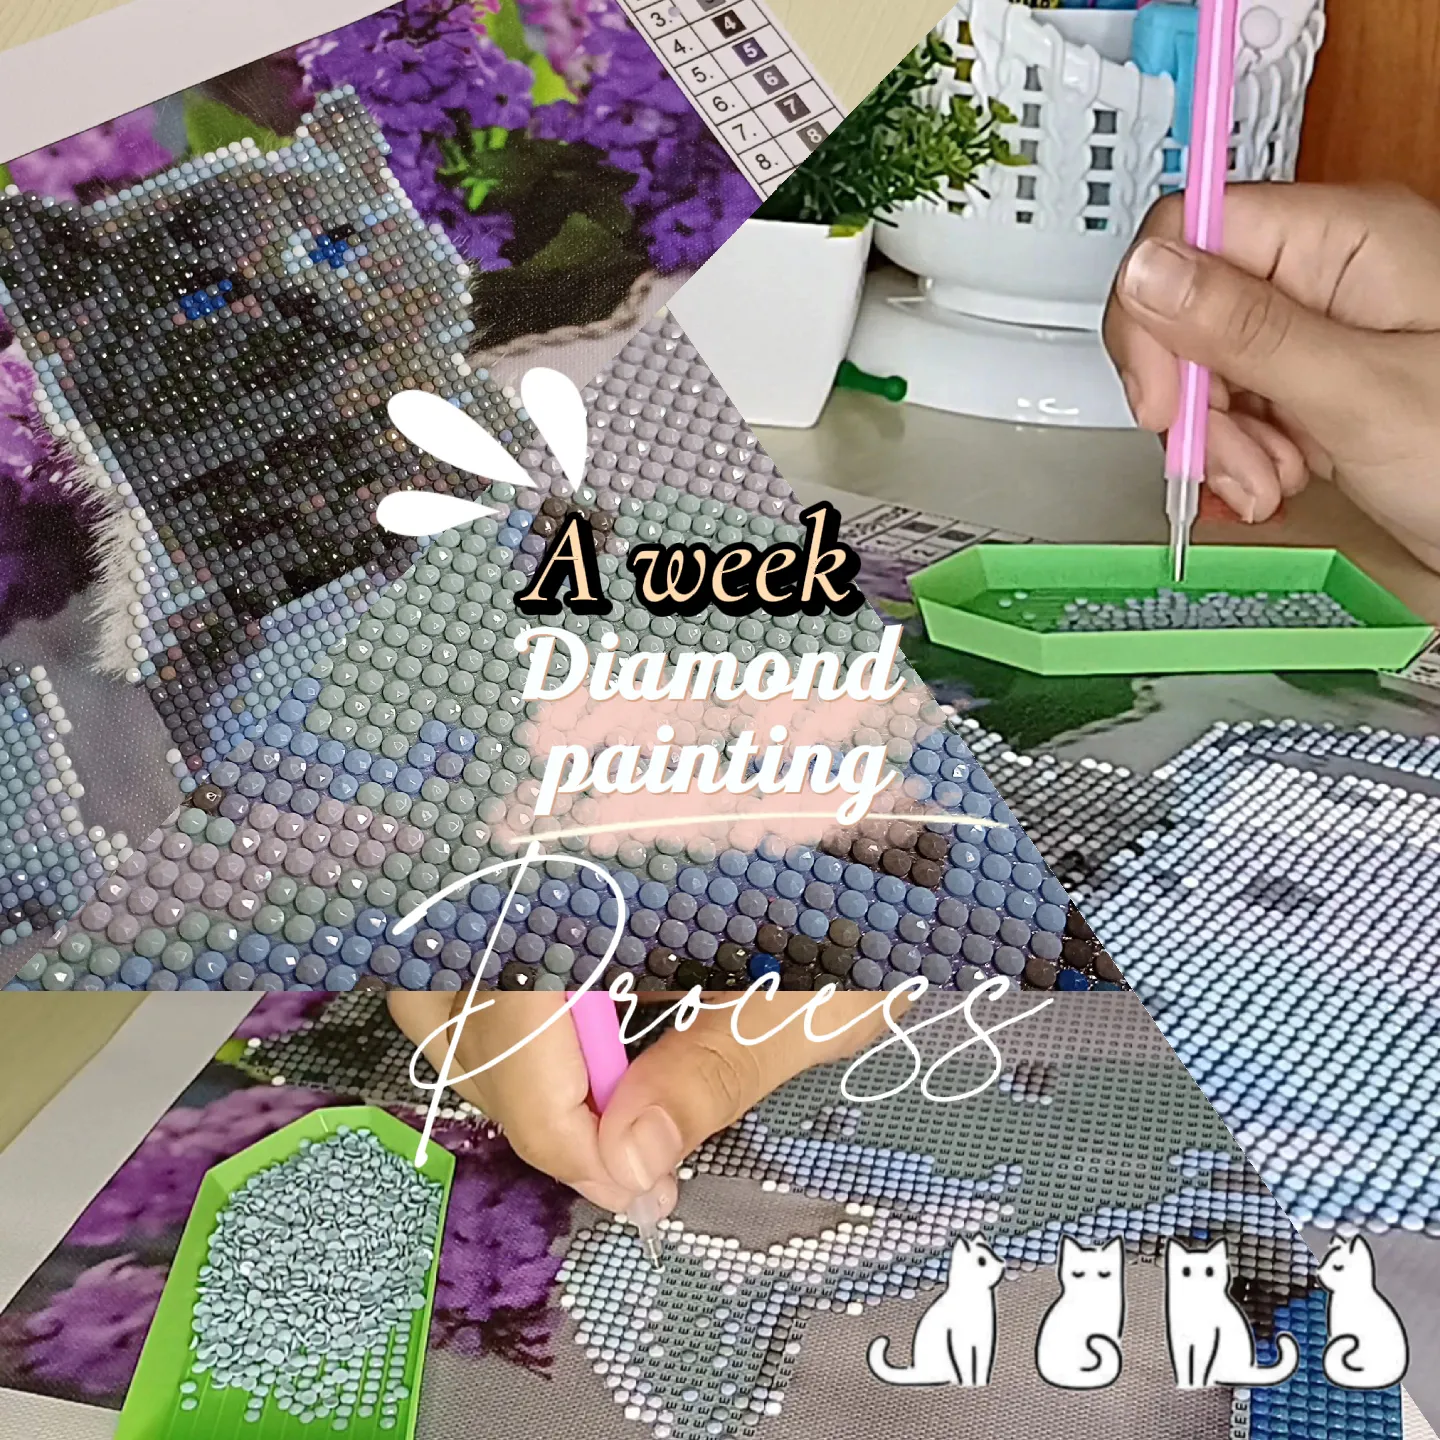 DIY diamond painting easel - Lemon8 Search